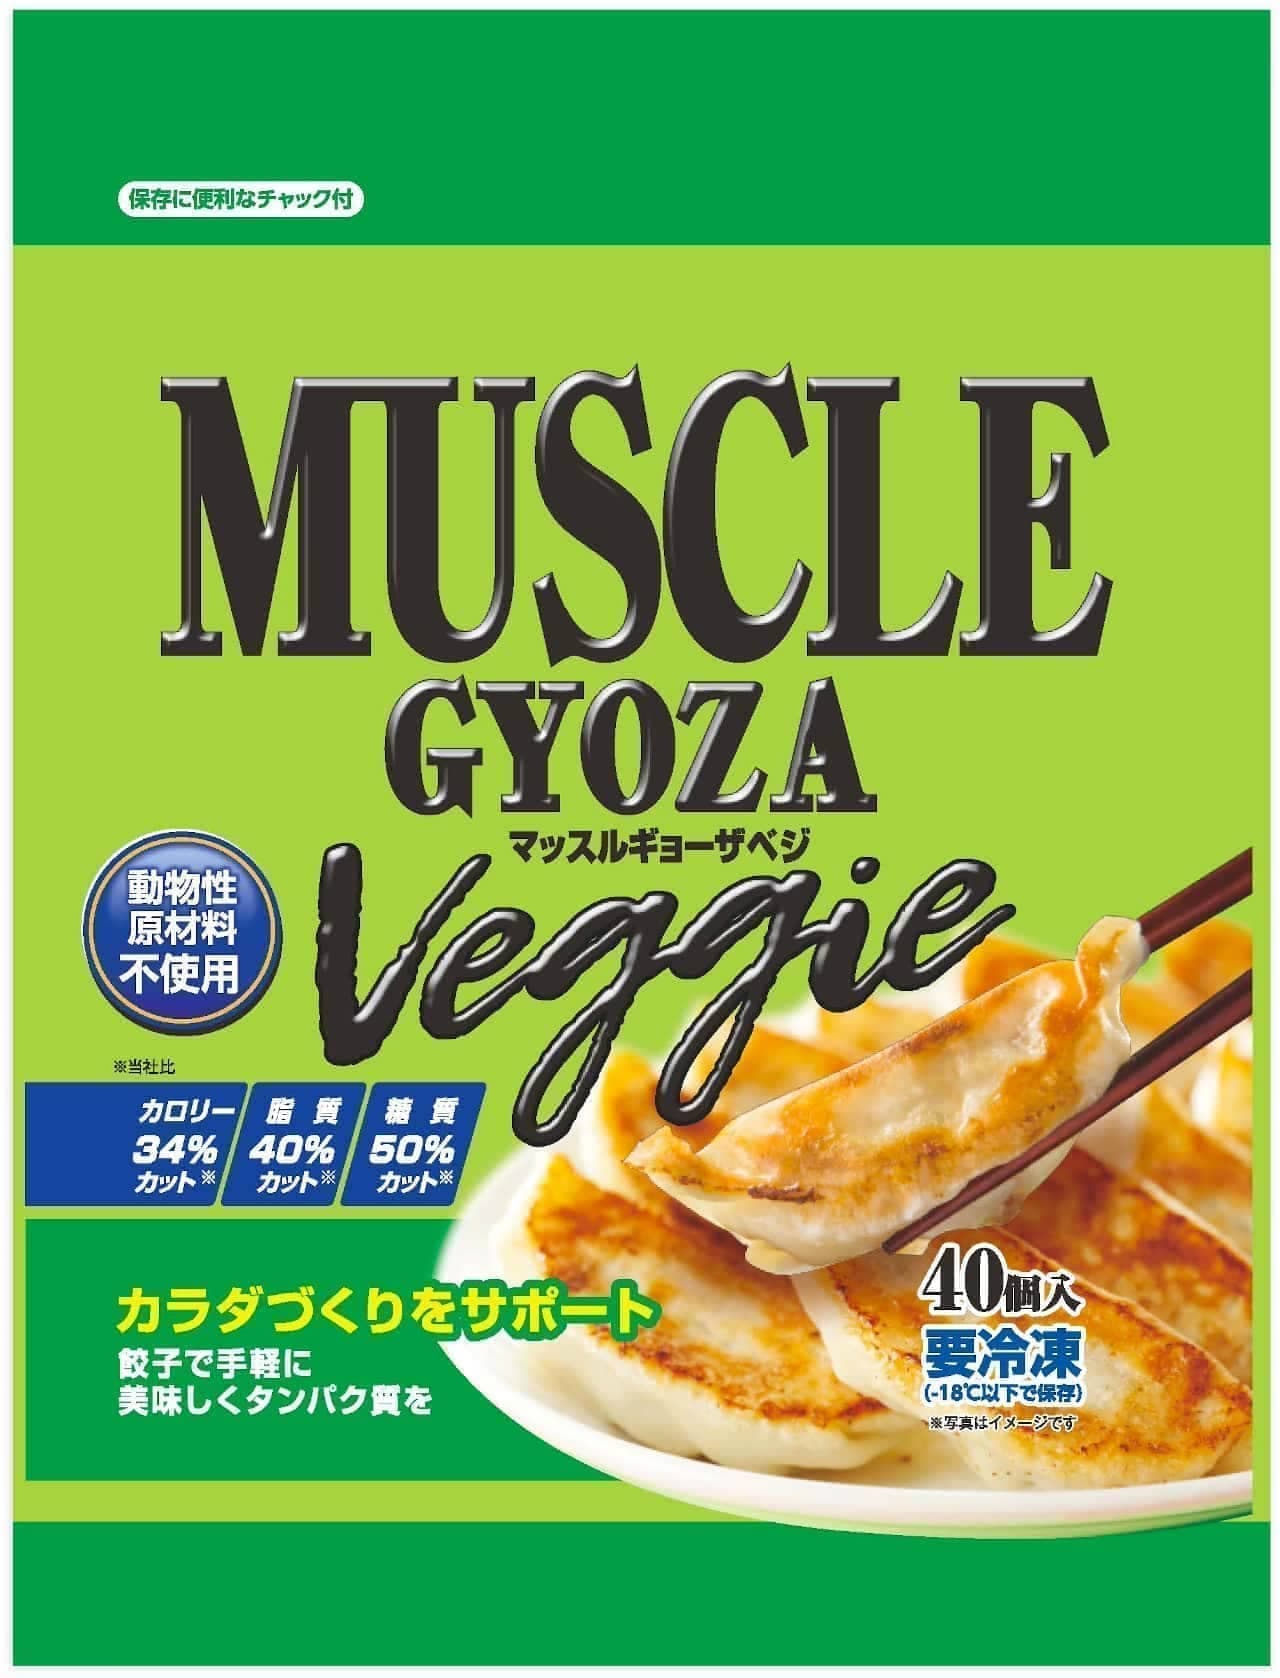 Shinei Foods "Muscle Gyoza Veggie"